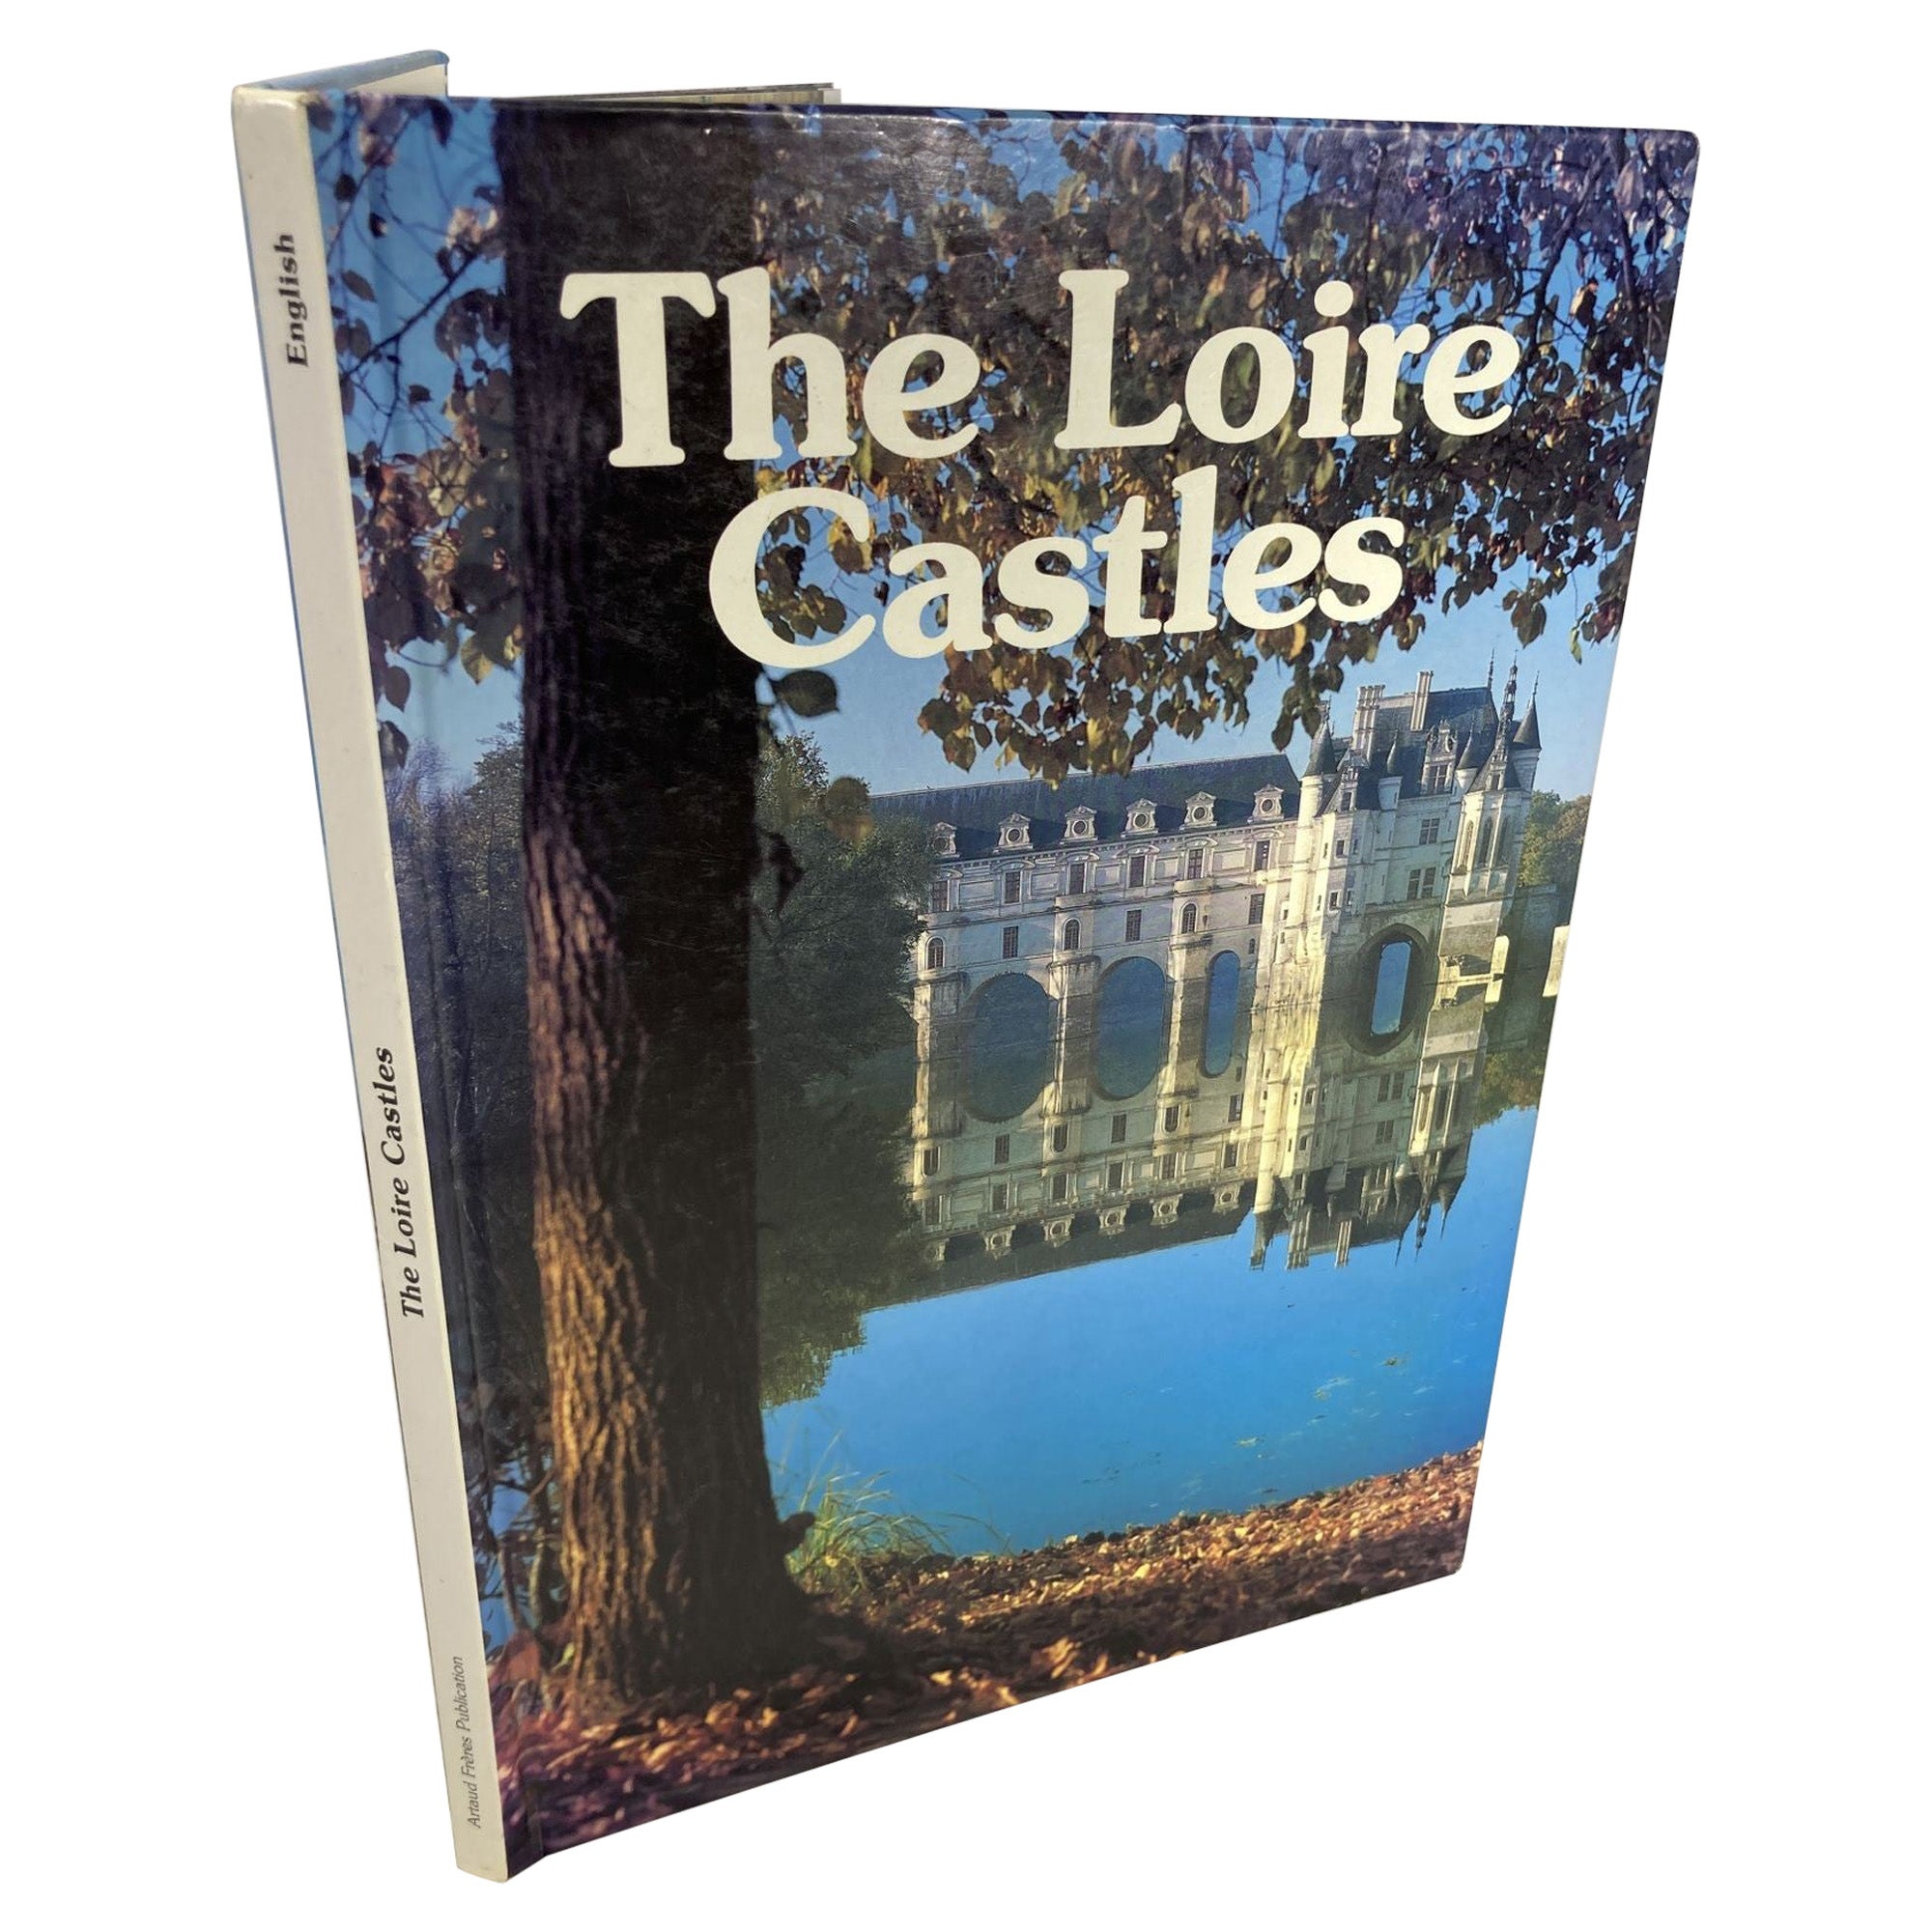 Loire Castles Artaud Freres Publication Hardcover Book by Armel De Wismes